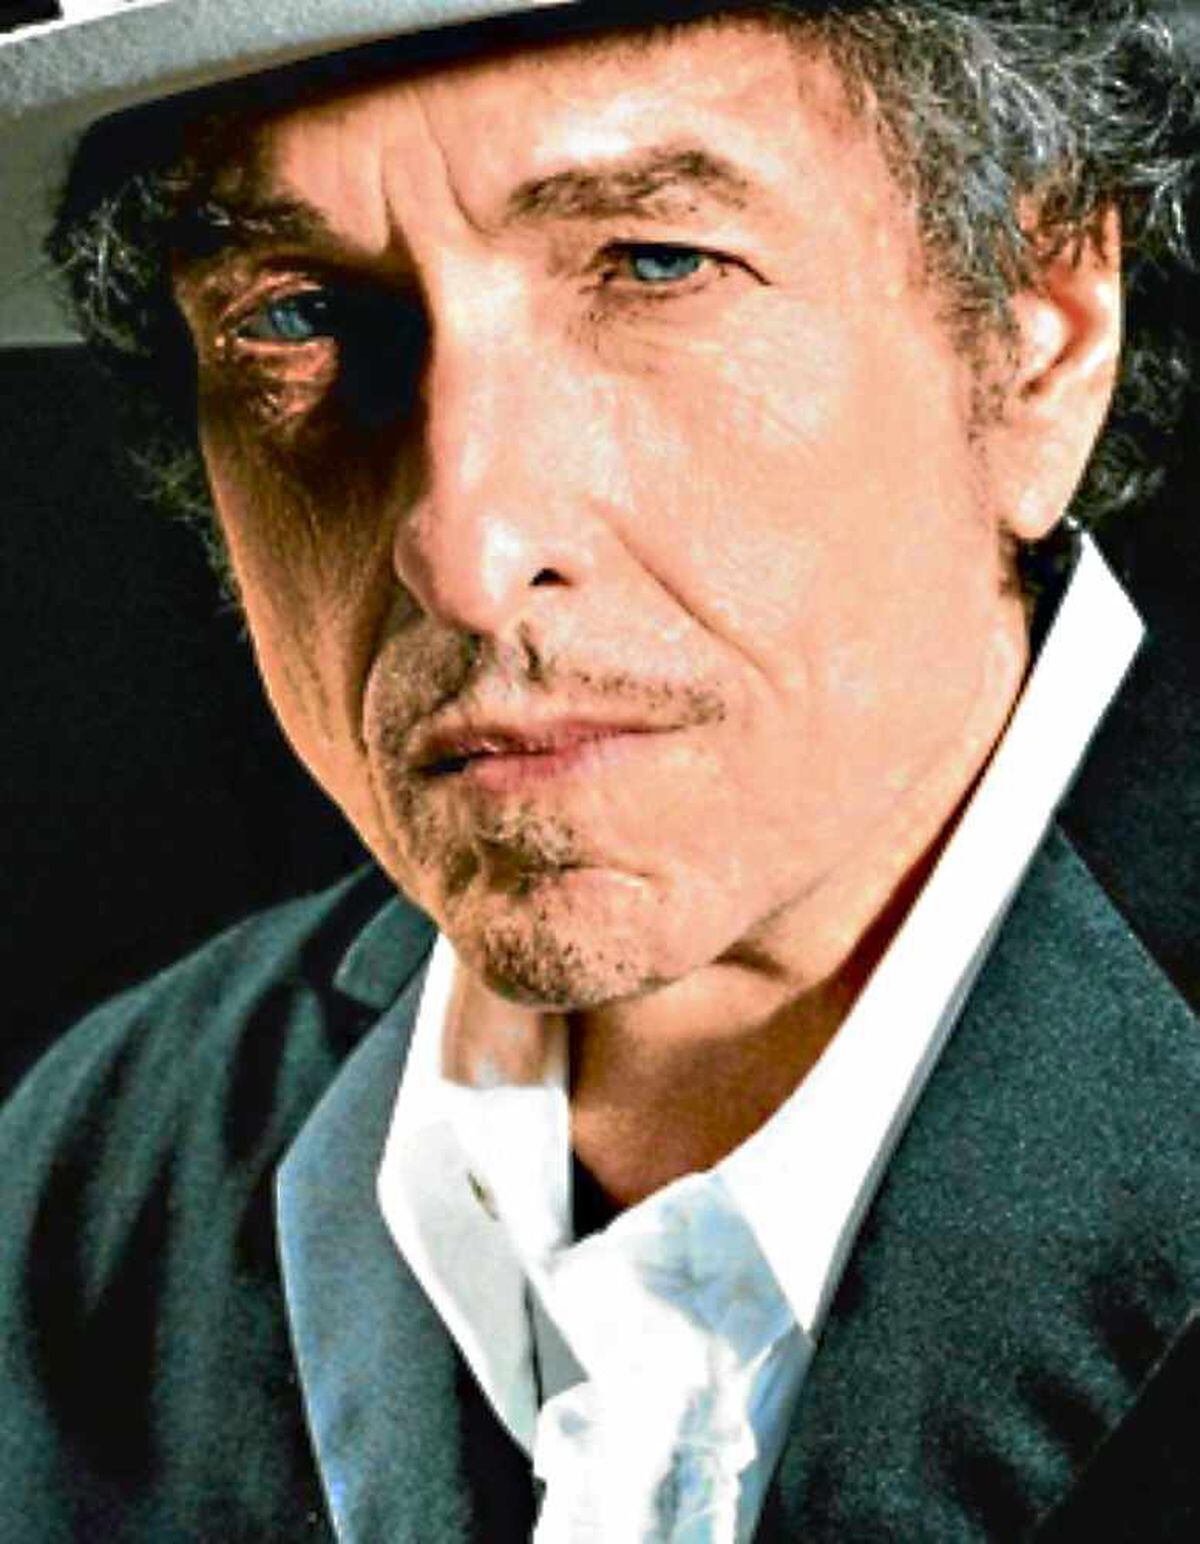 Musician and artist, Bob Dylan